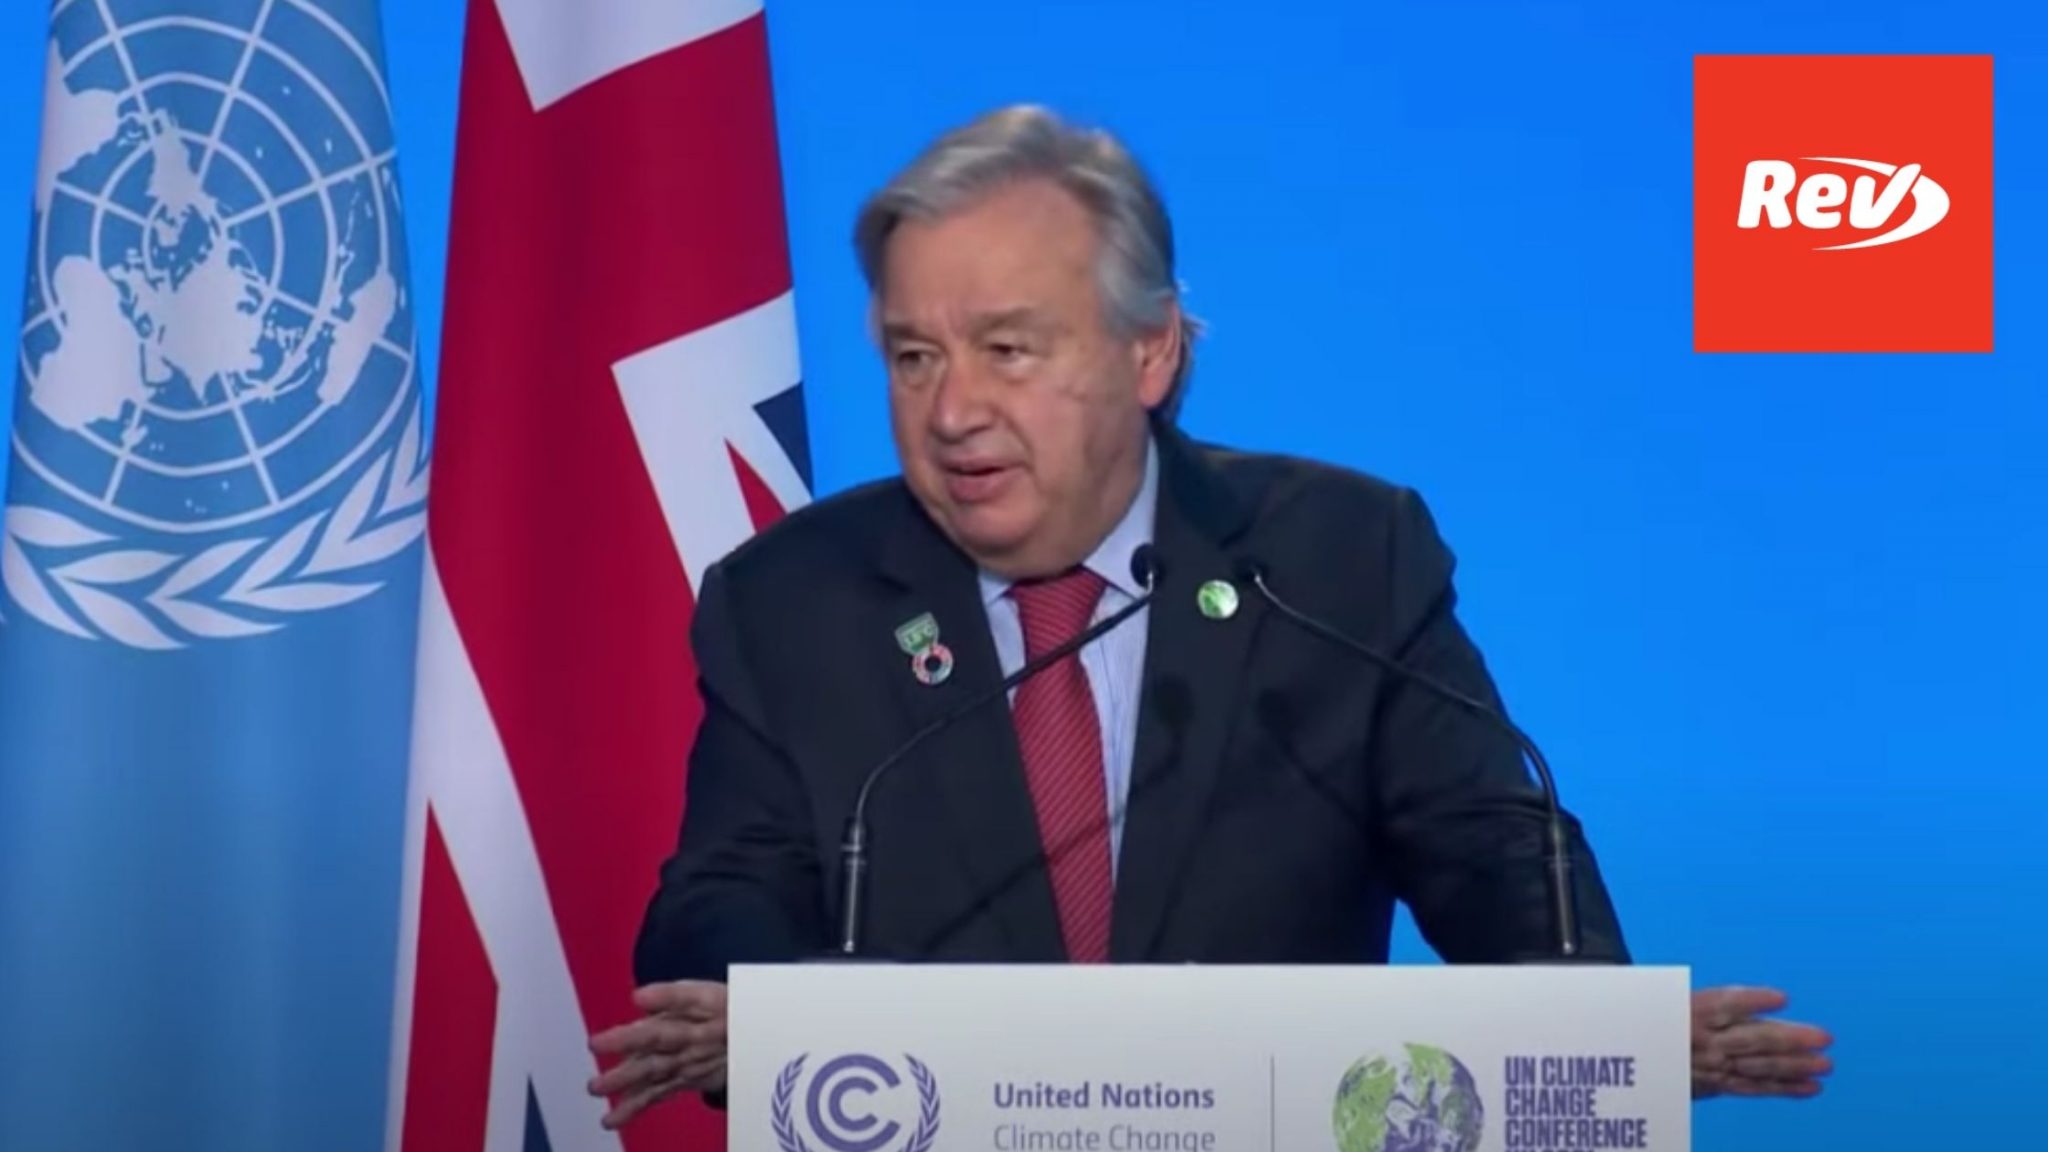 UN Secretary General COP26 Speech Transcript: "We Know What Must Be Done"